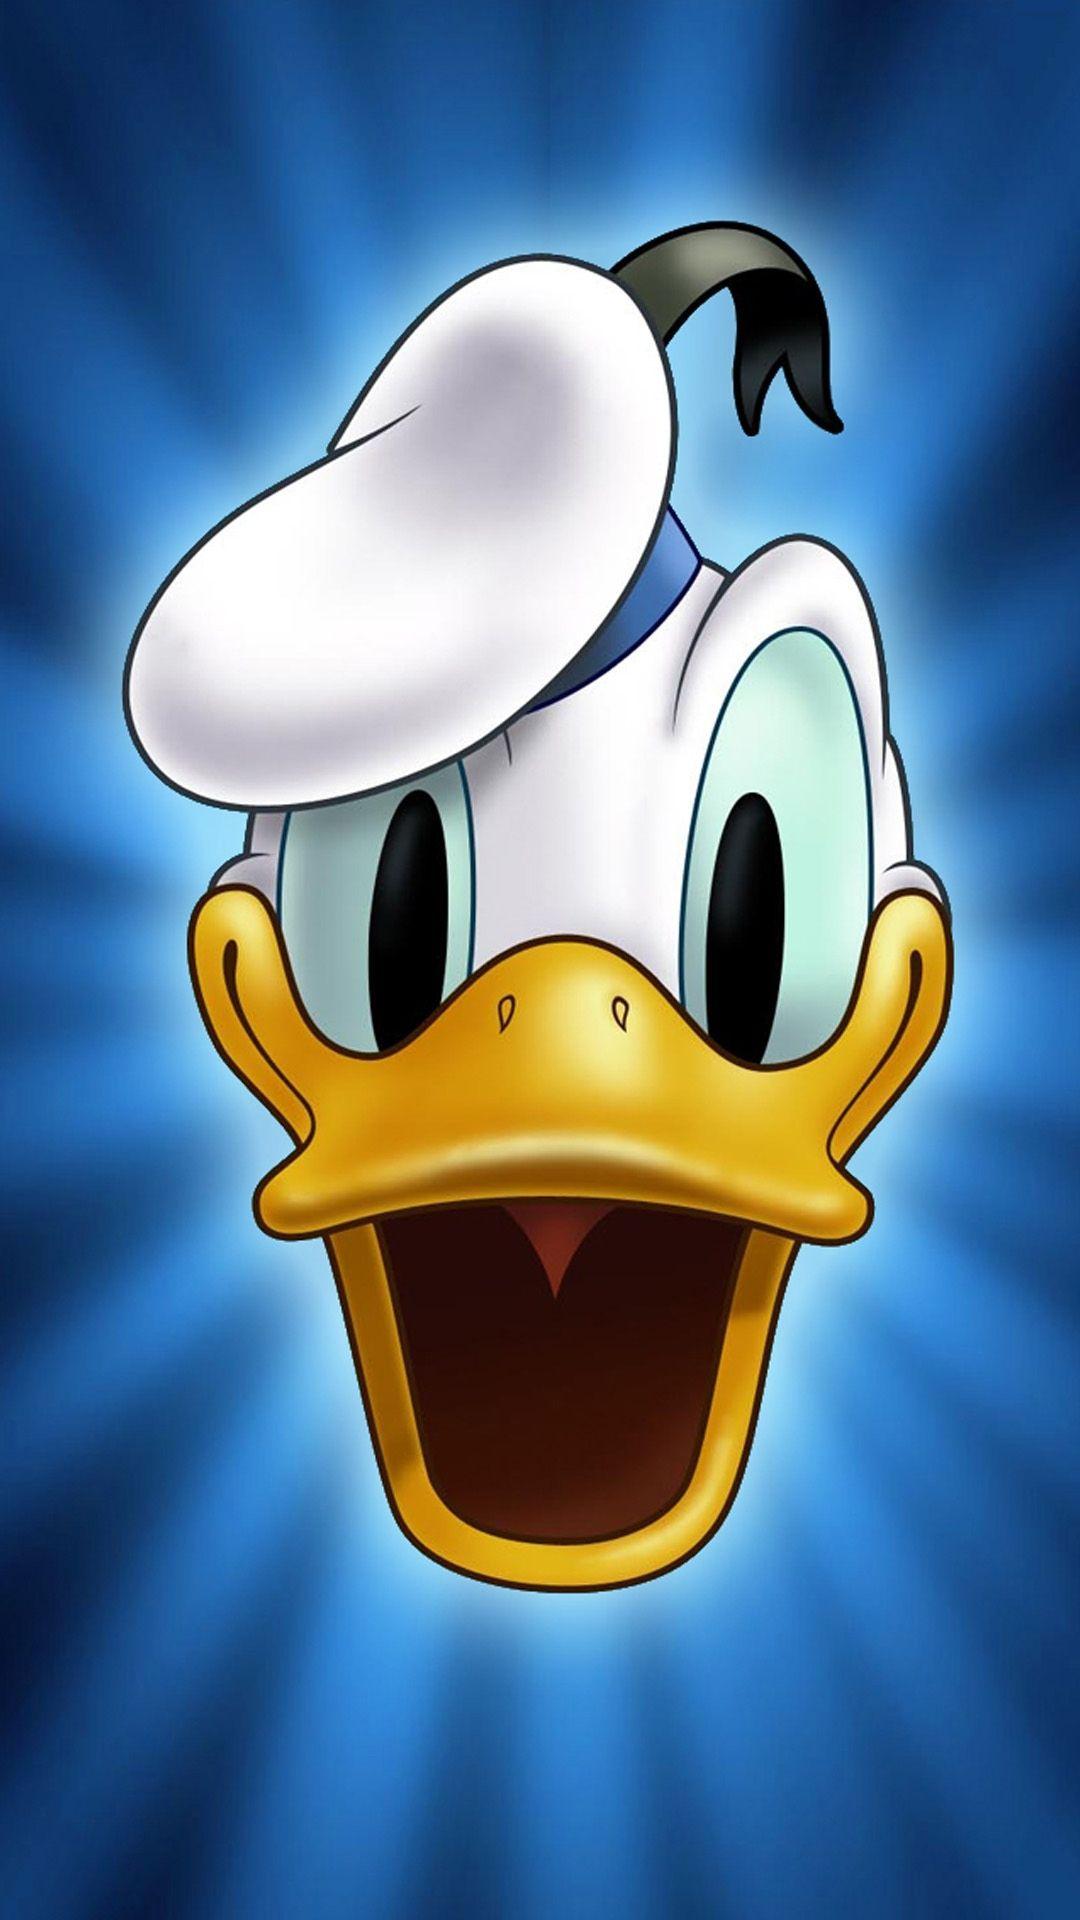 Donald Duck iPhone Wallpapers - Top Free Donald Duck ...